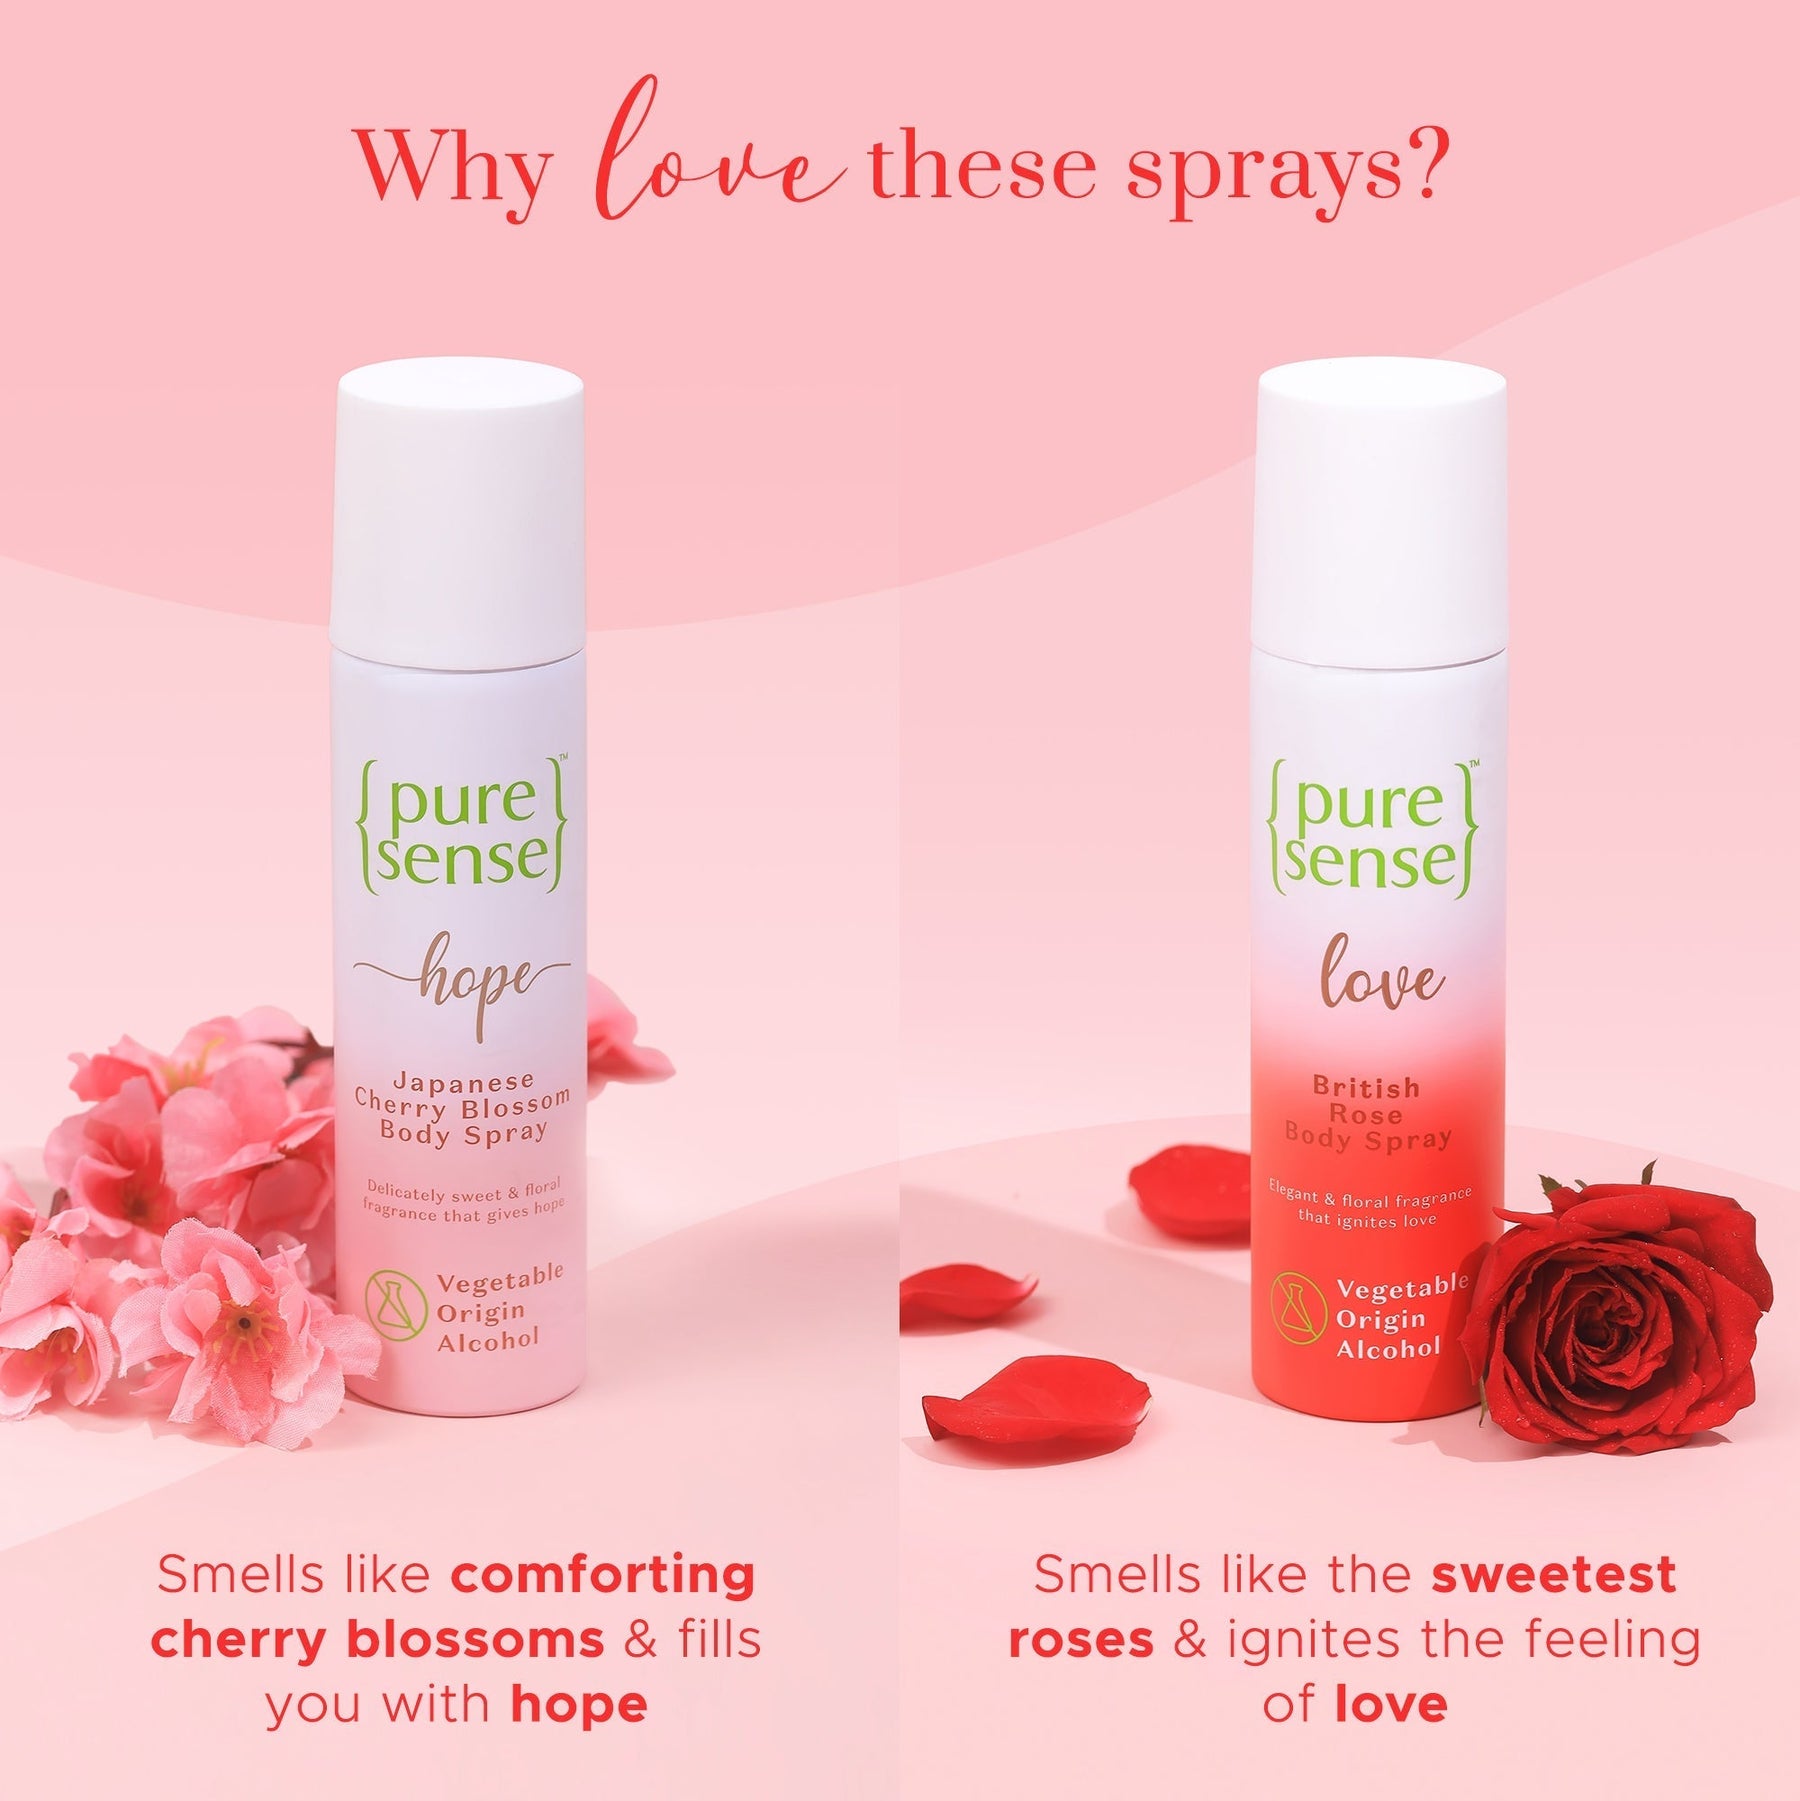 British Rose Body Spray & Japanese Cherry Blossom Body Spray |  From the makers of Parachute Advansed | 300ml